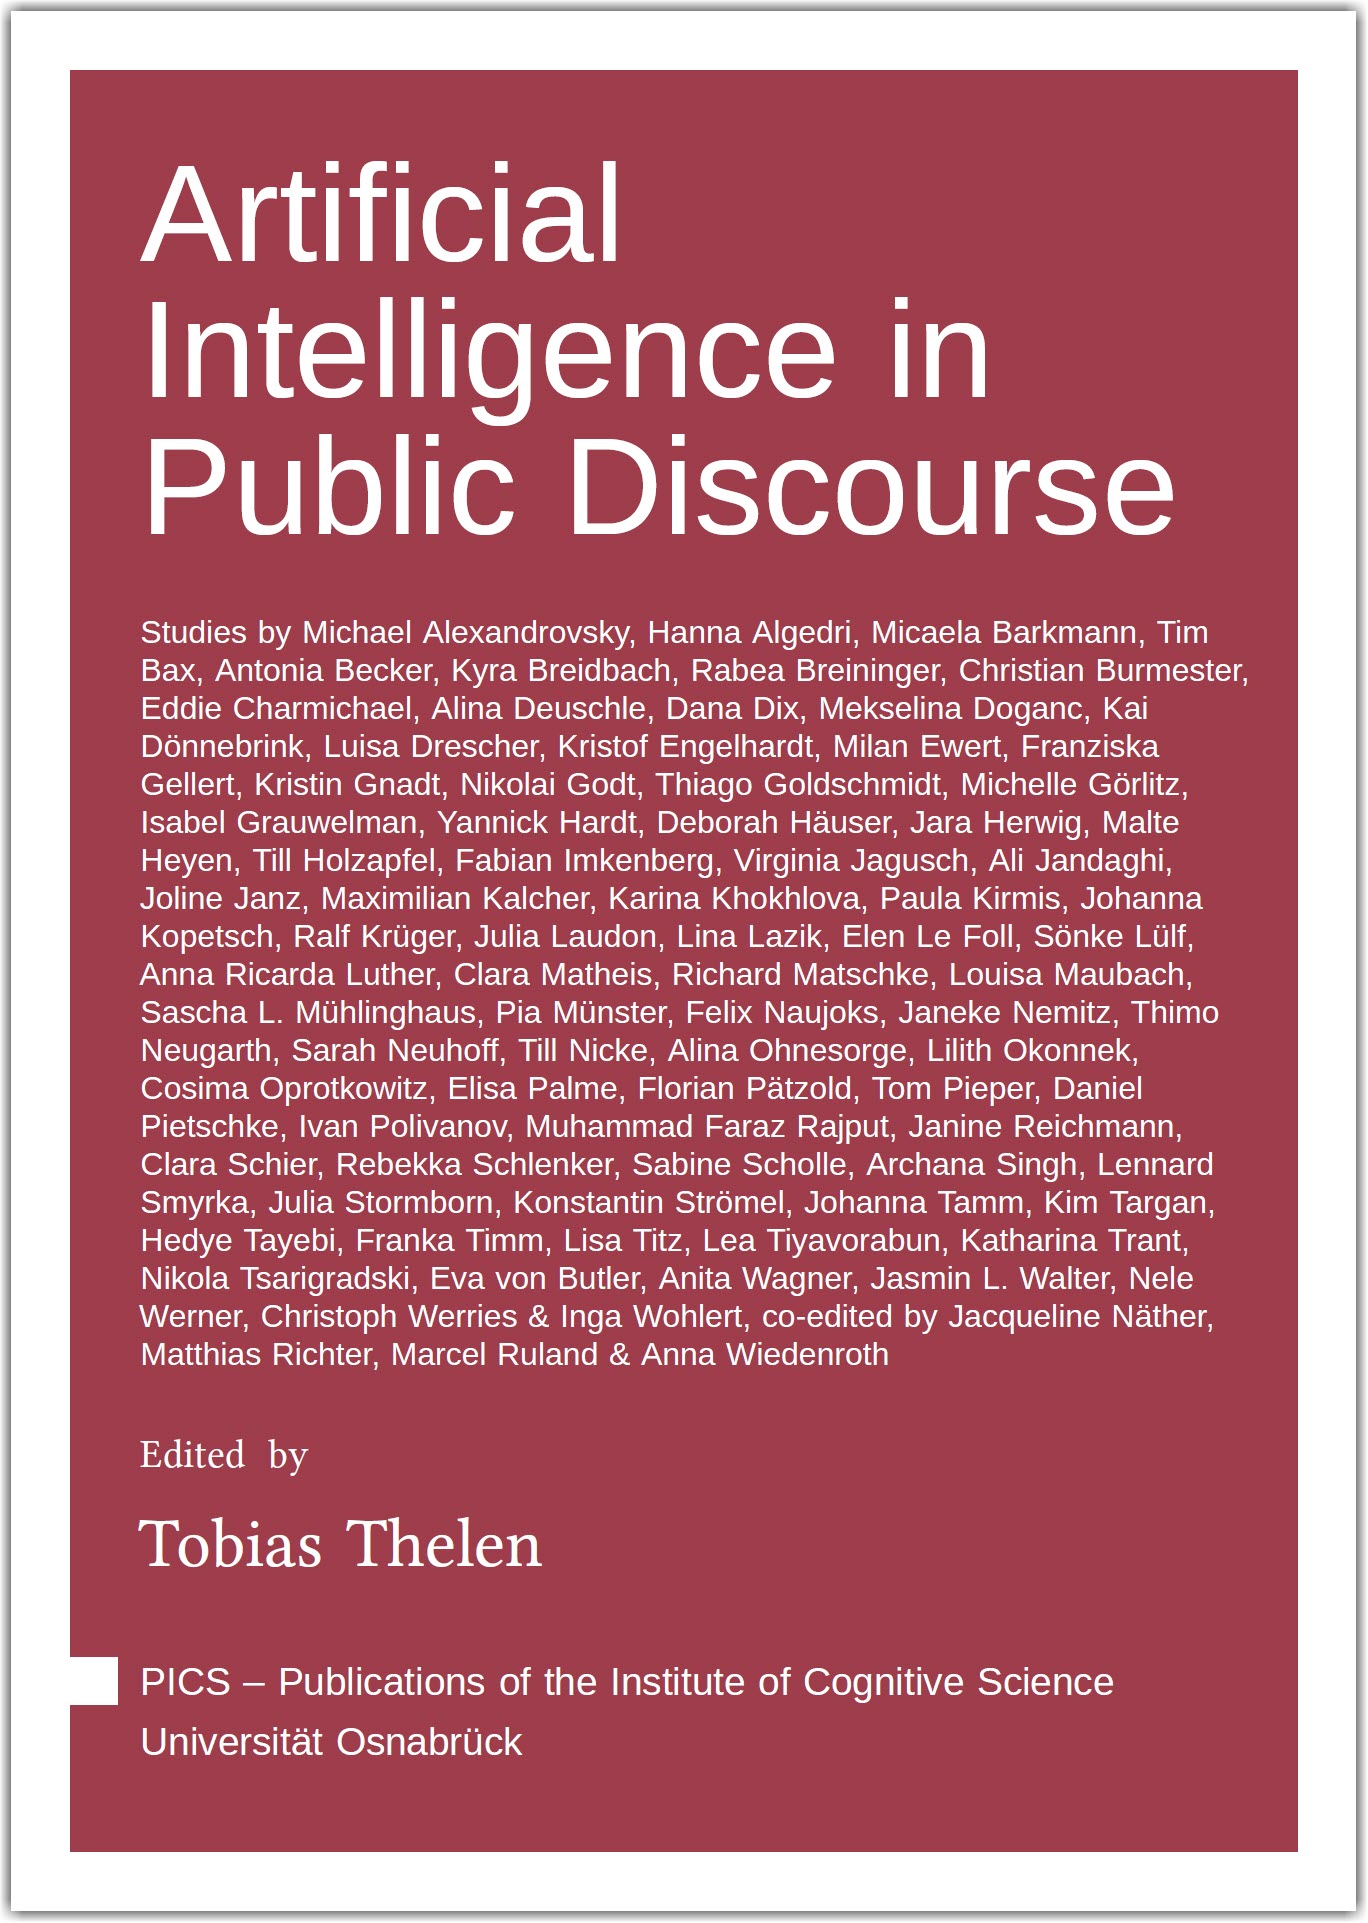 Artificial Intelligence in Public Discourse book cover.